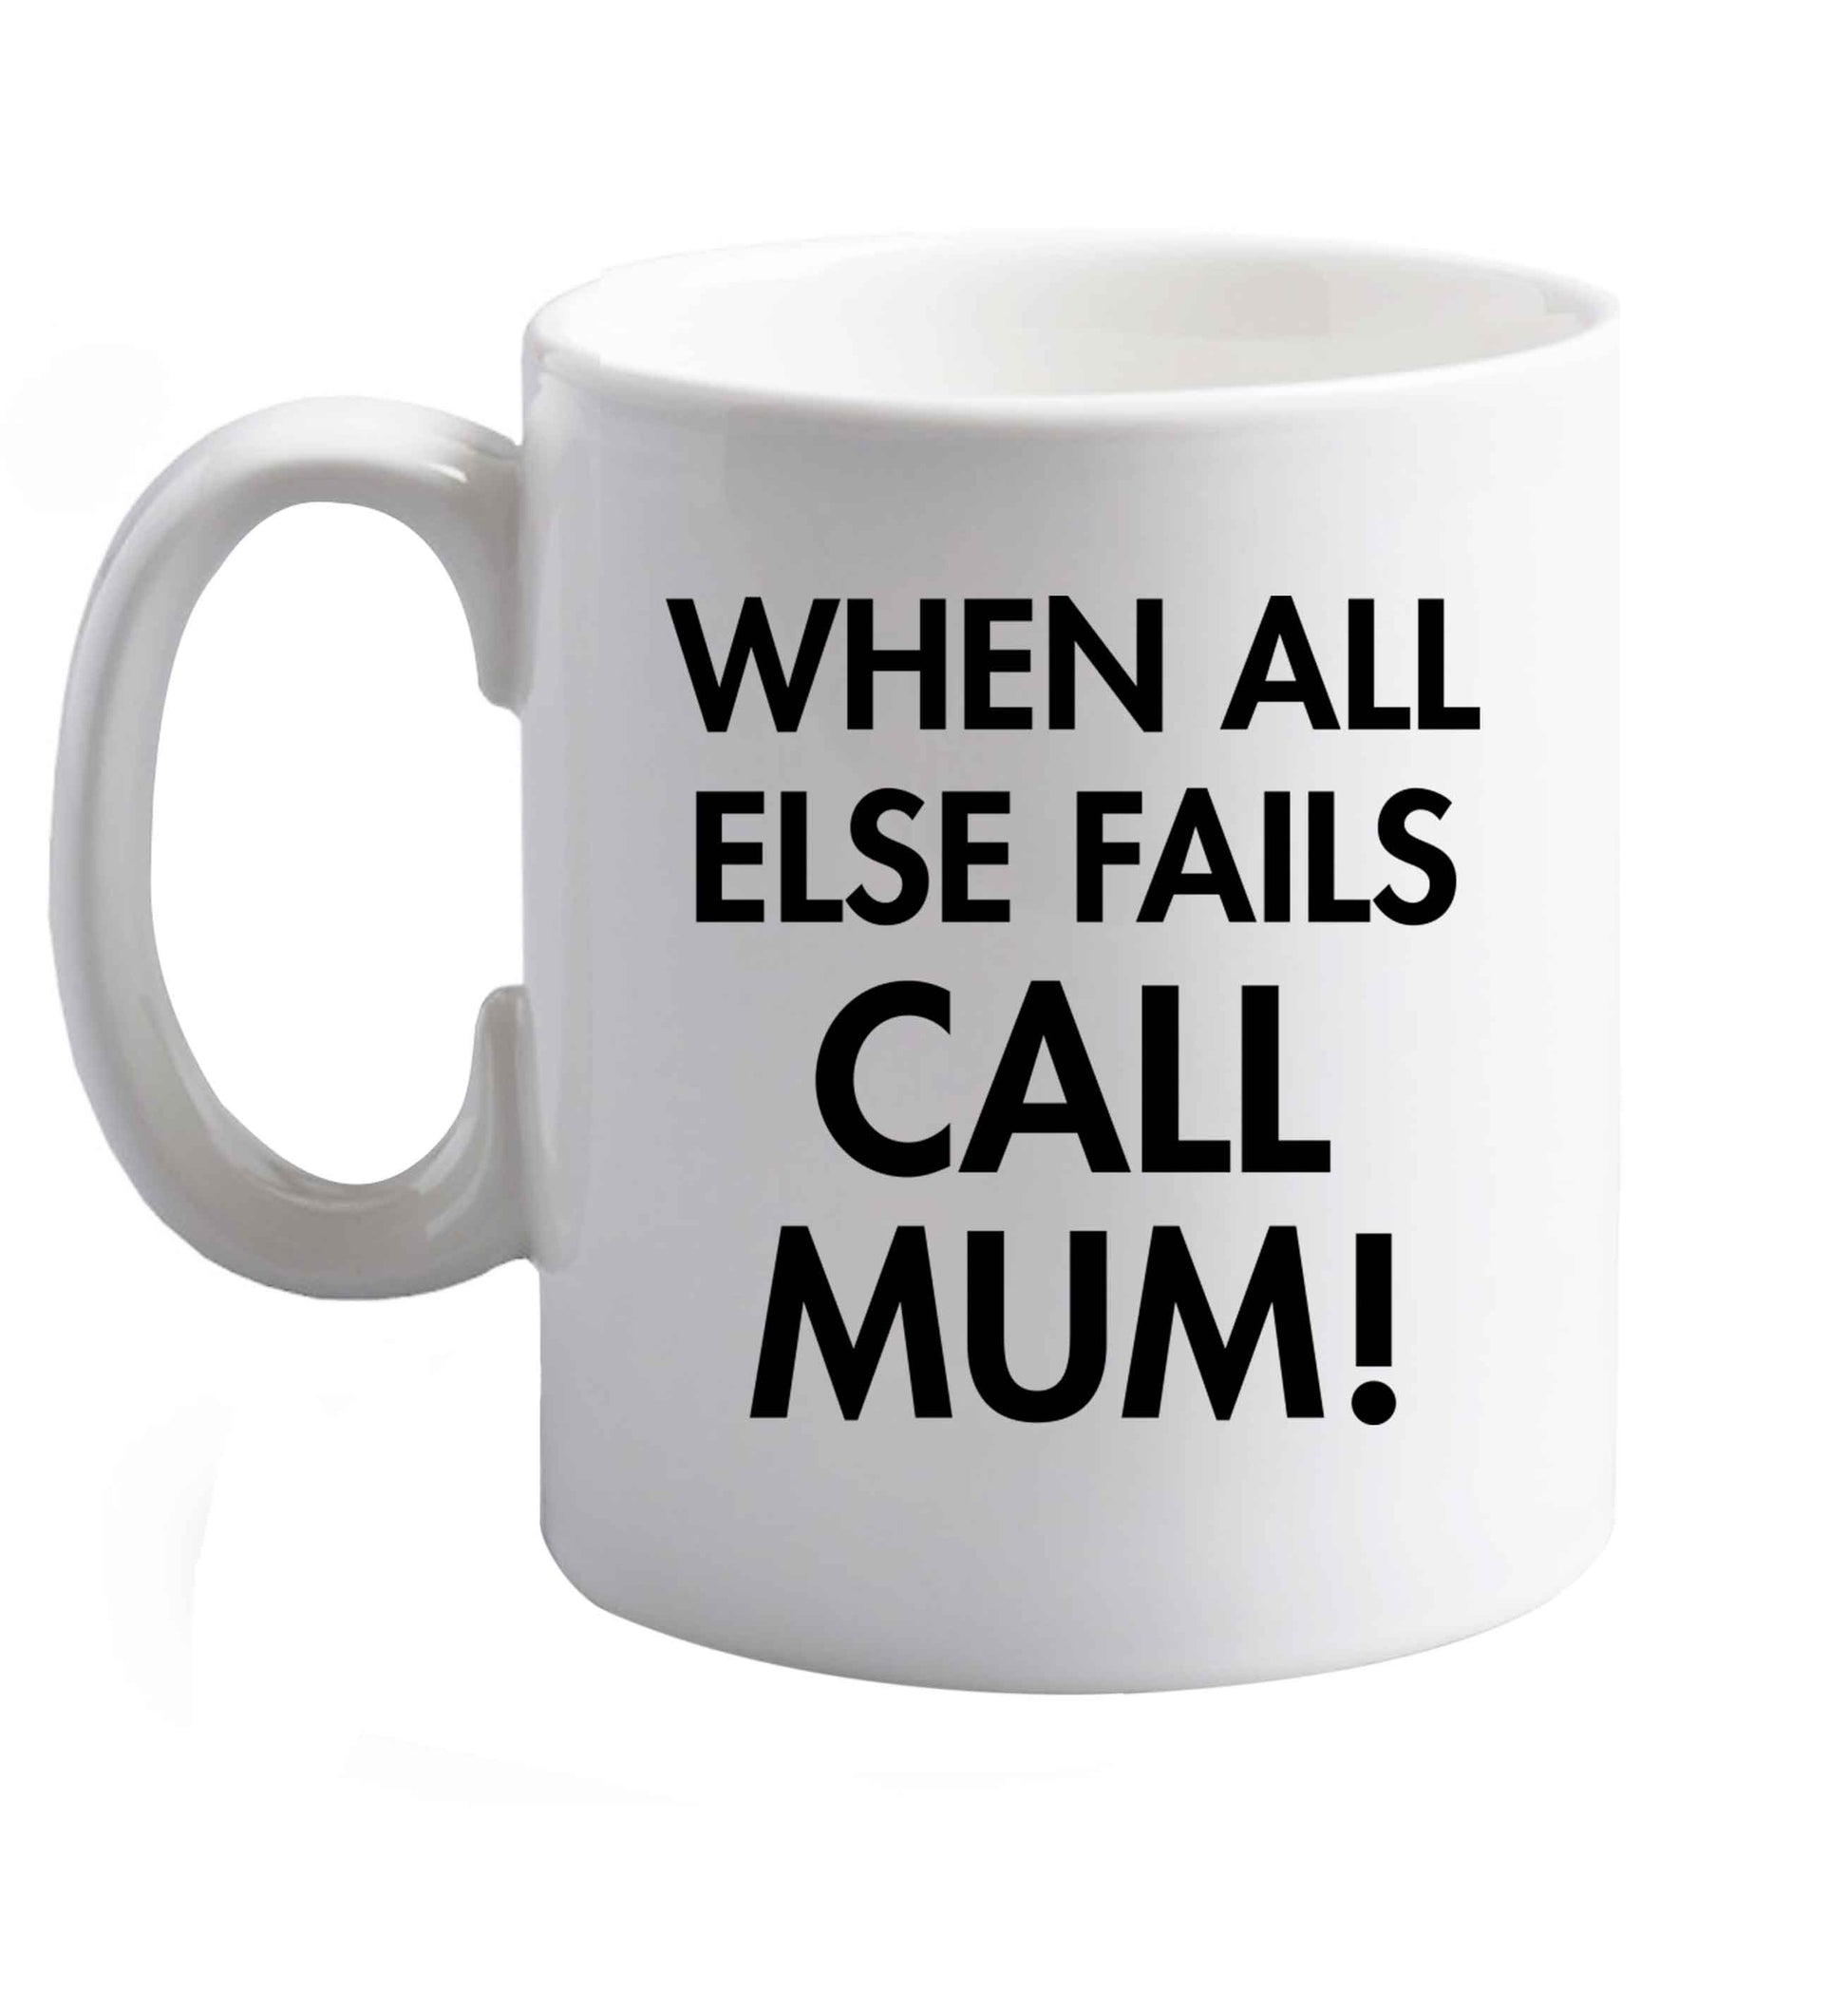 10 oz When all else fails call mum! ceramic mug right handed